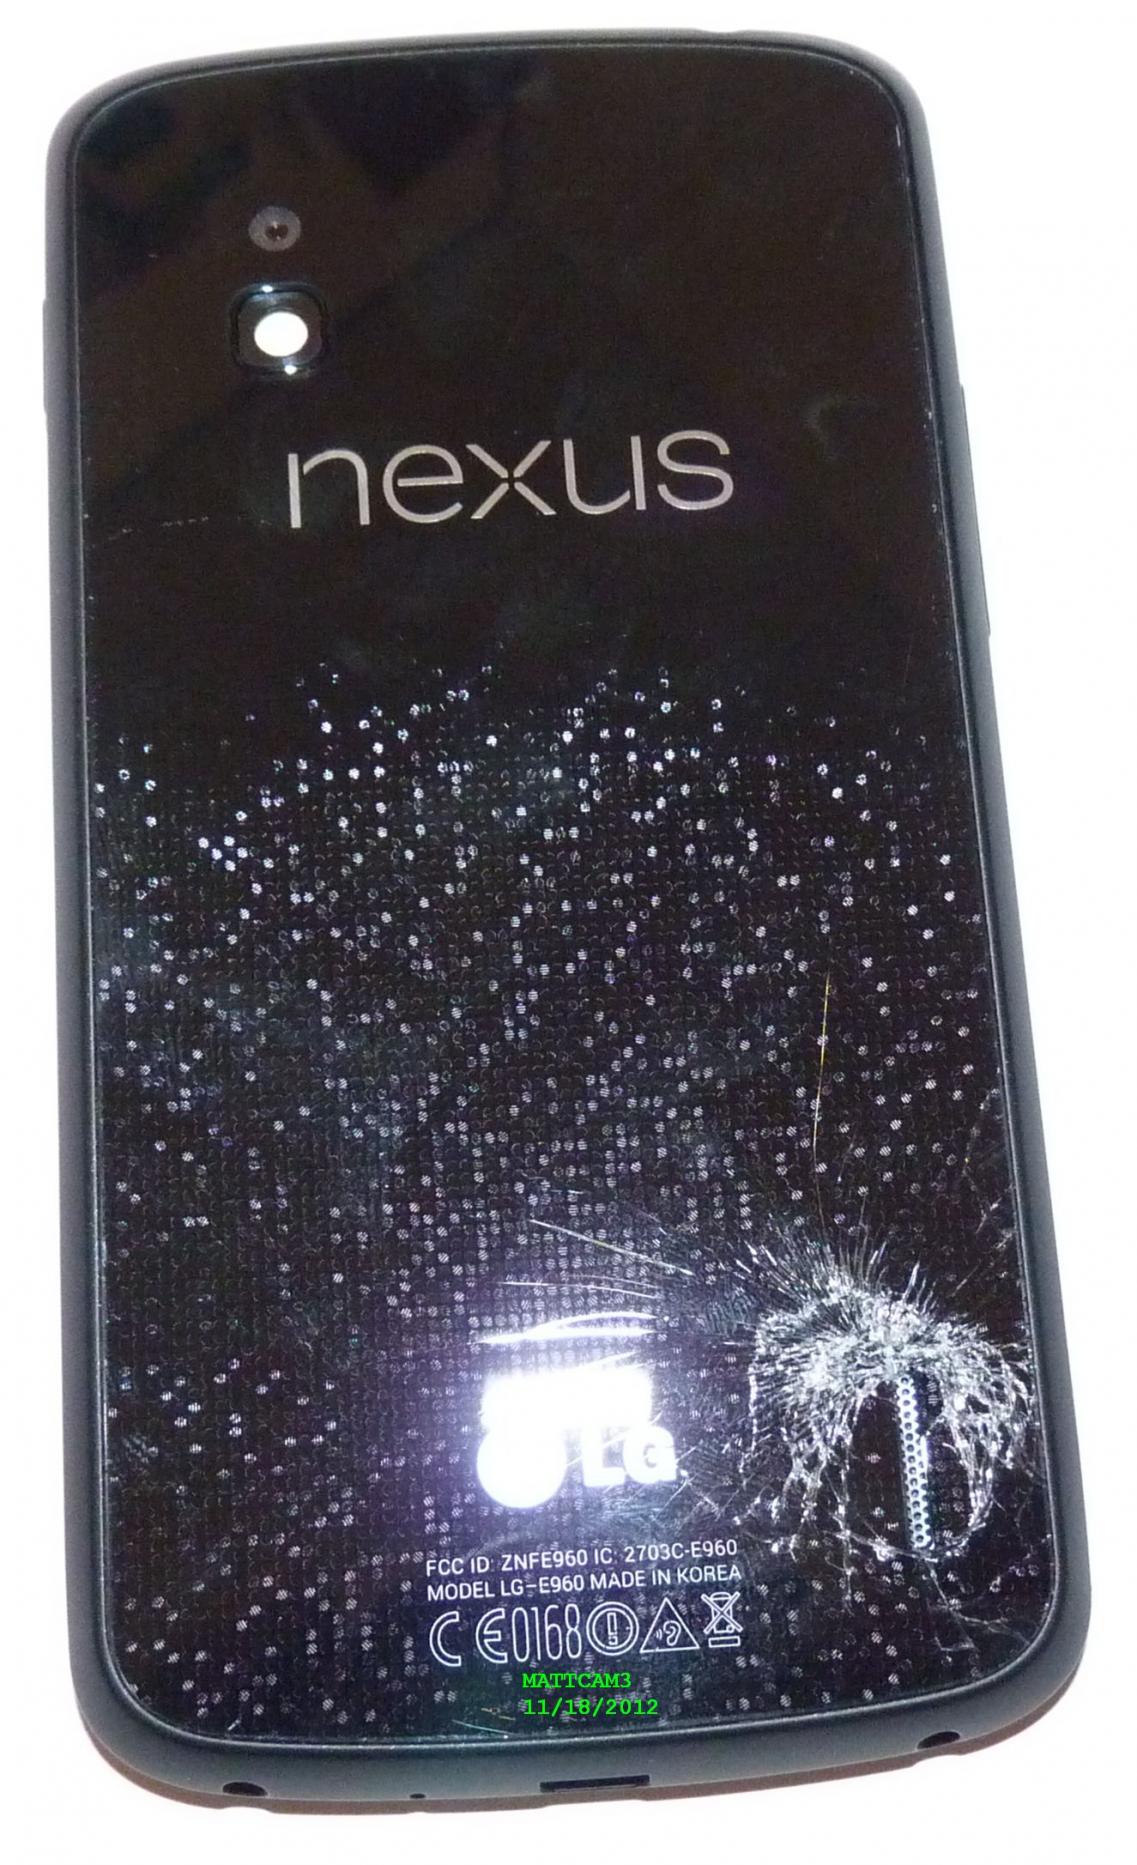 ‘Glazen achterkant Nexus 4 breekt te makkelijk’